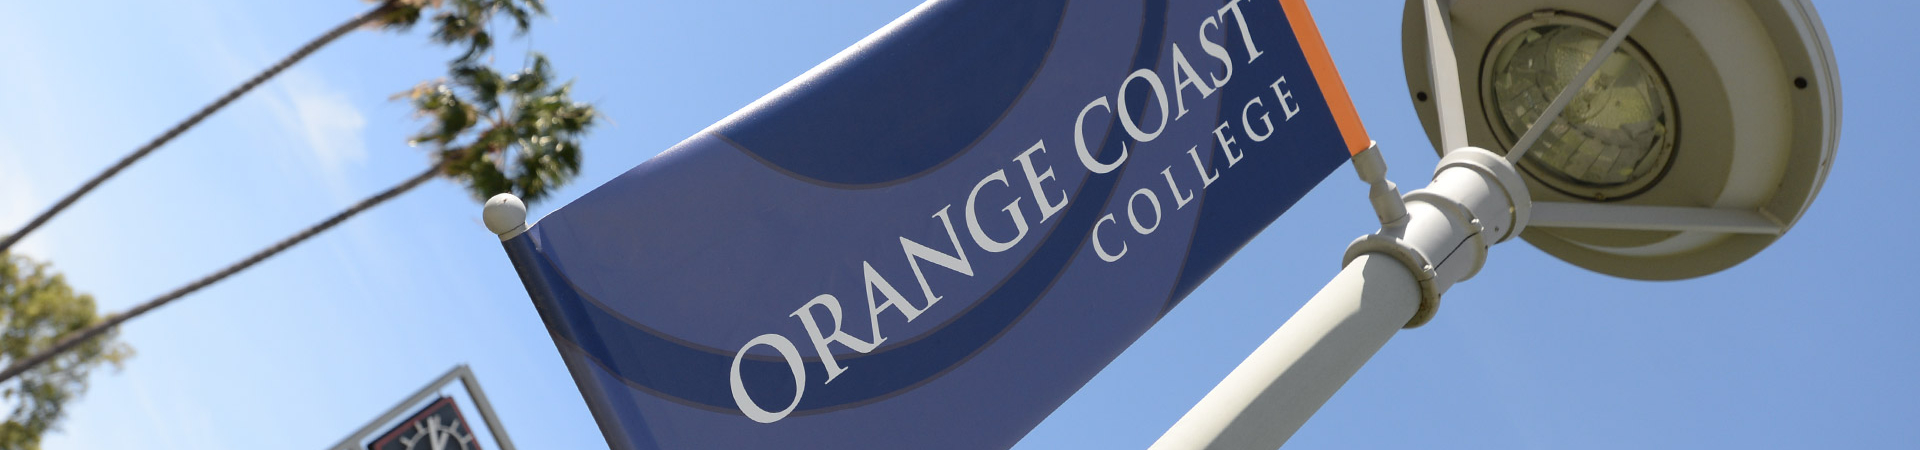 Orange Coast College spirt banner hanging on a lamp post.